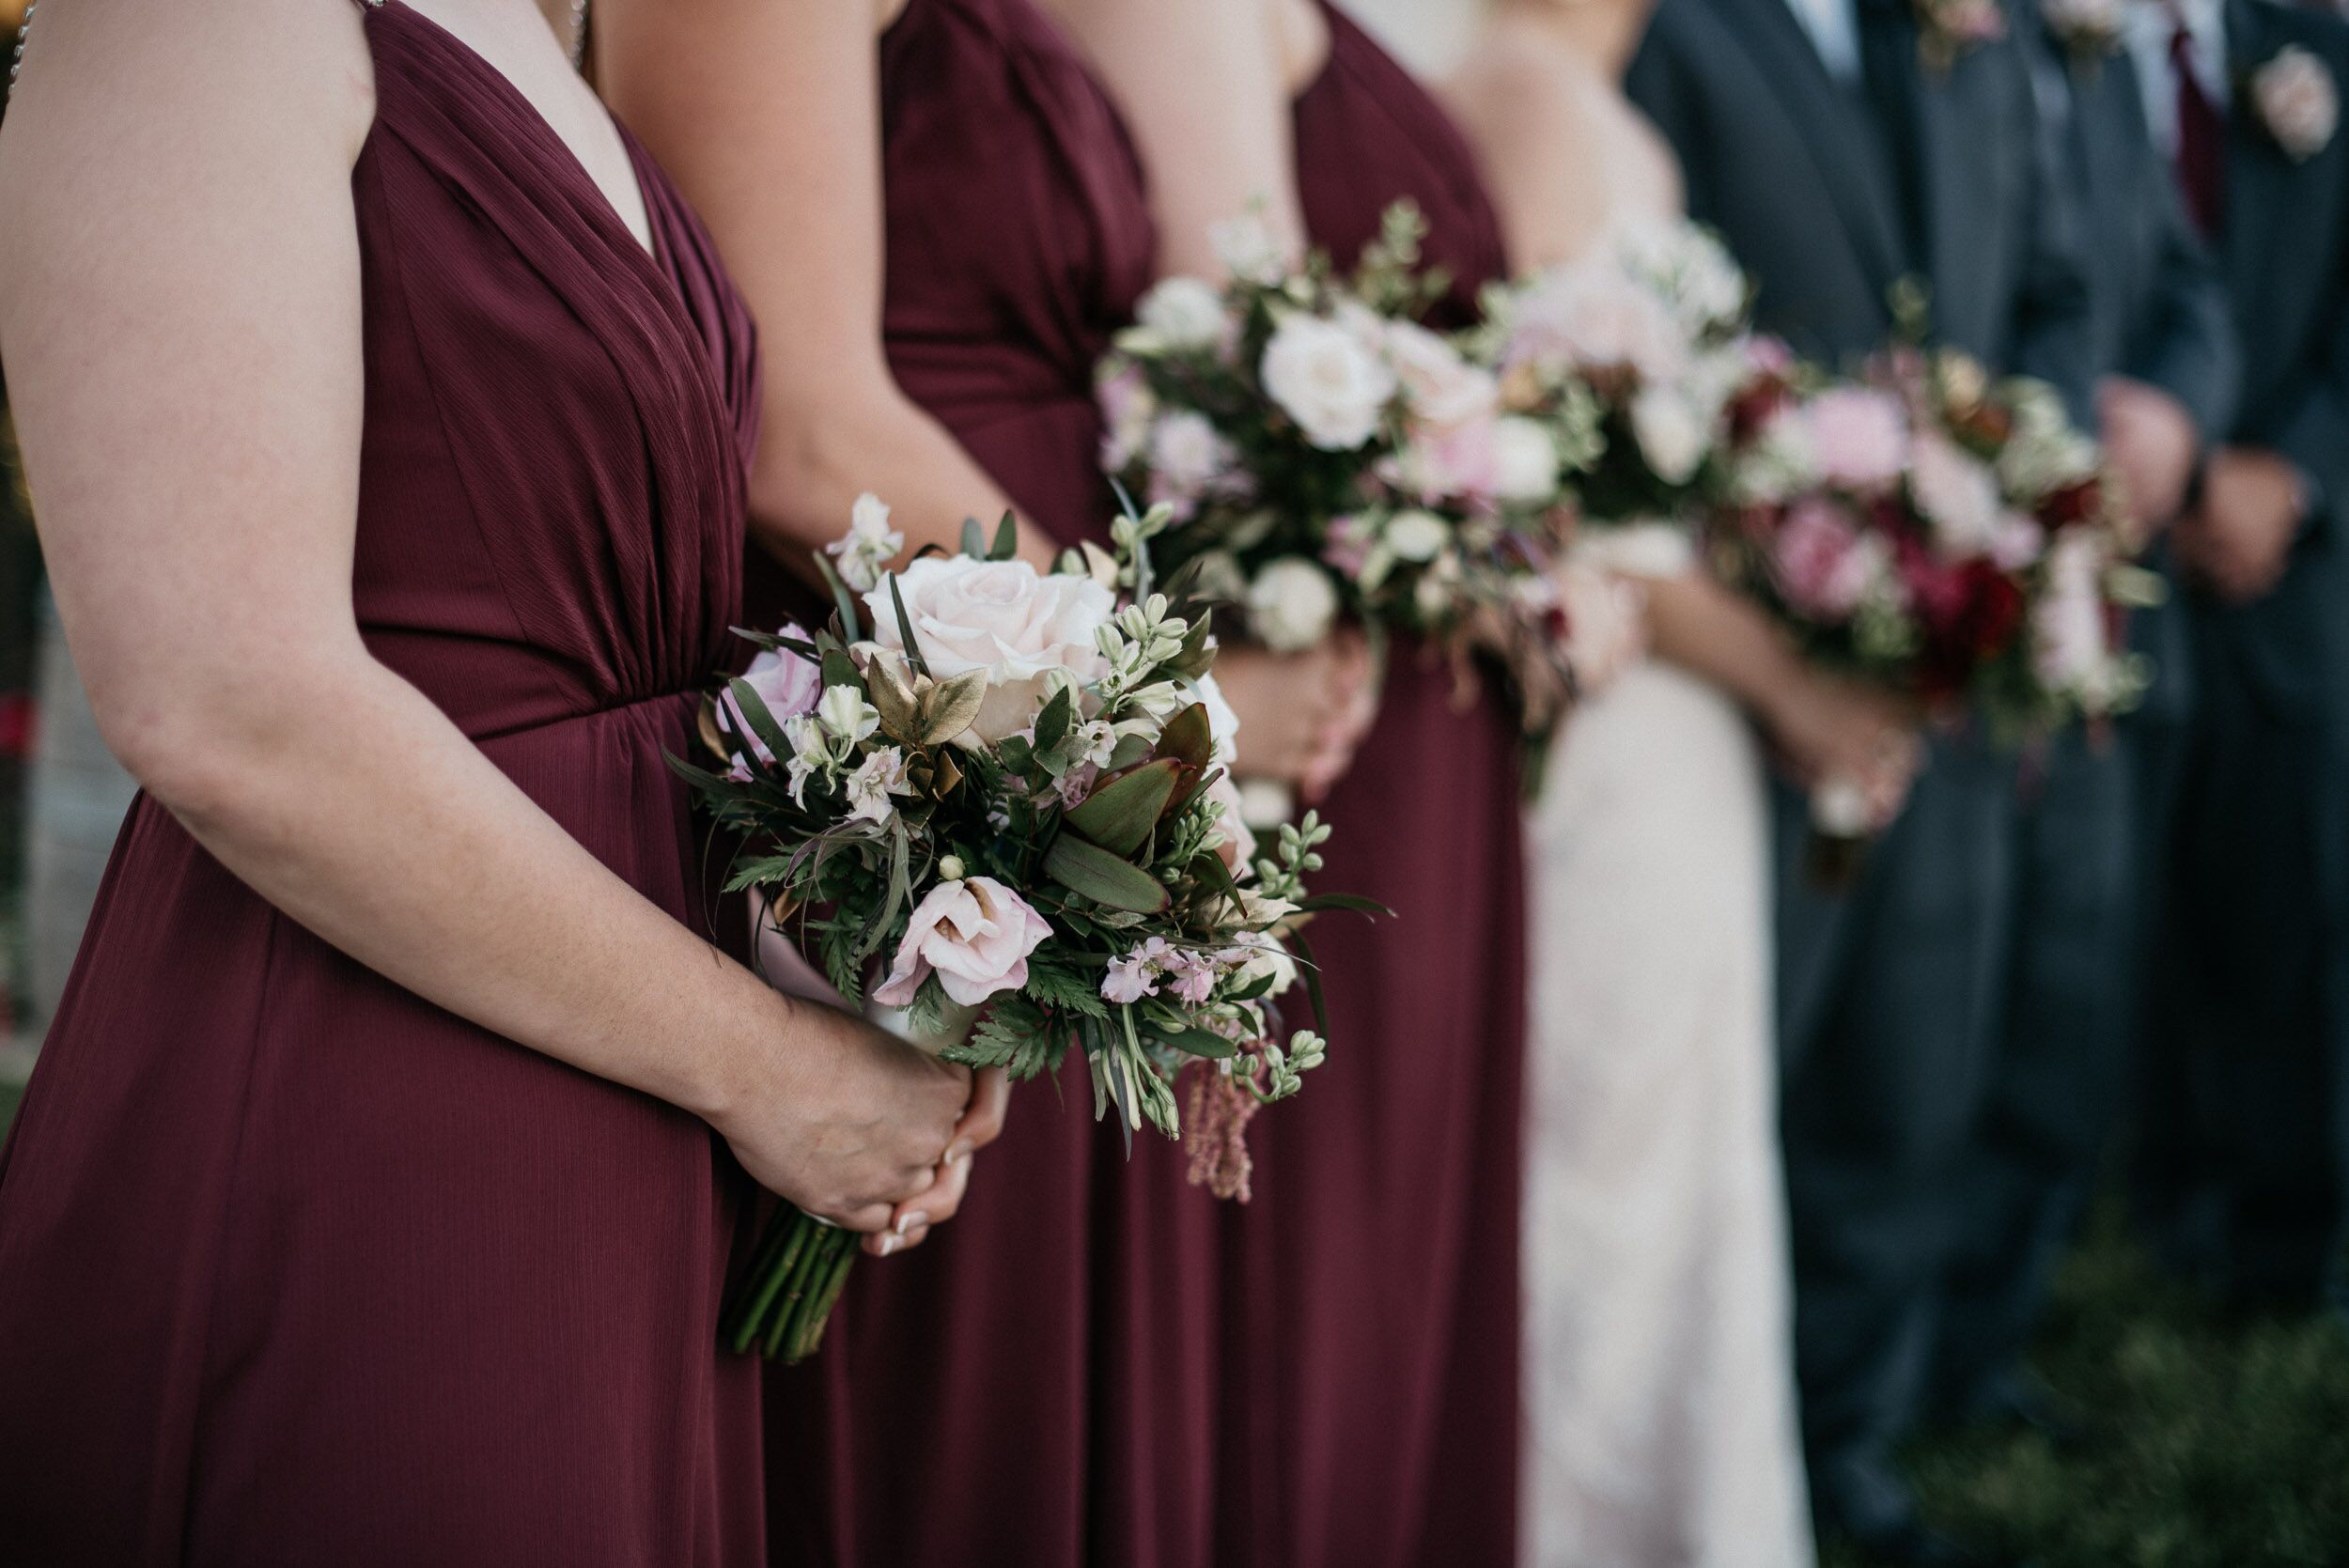 blush and burgundy bridesmaid dresses